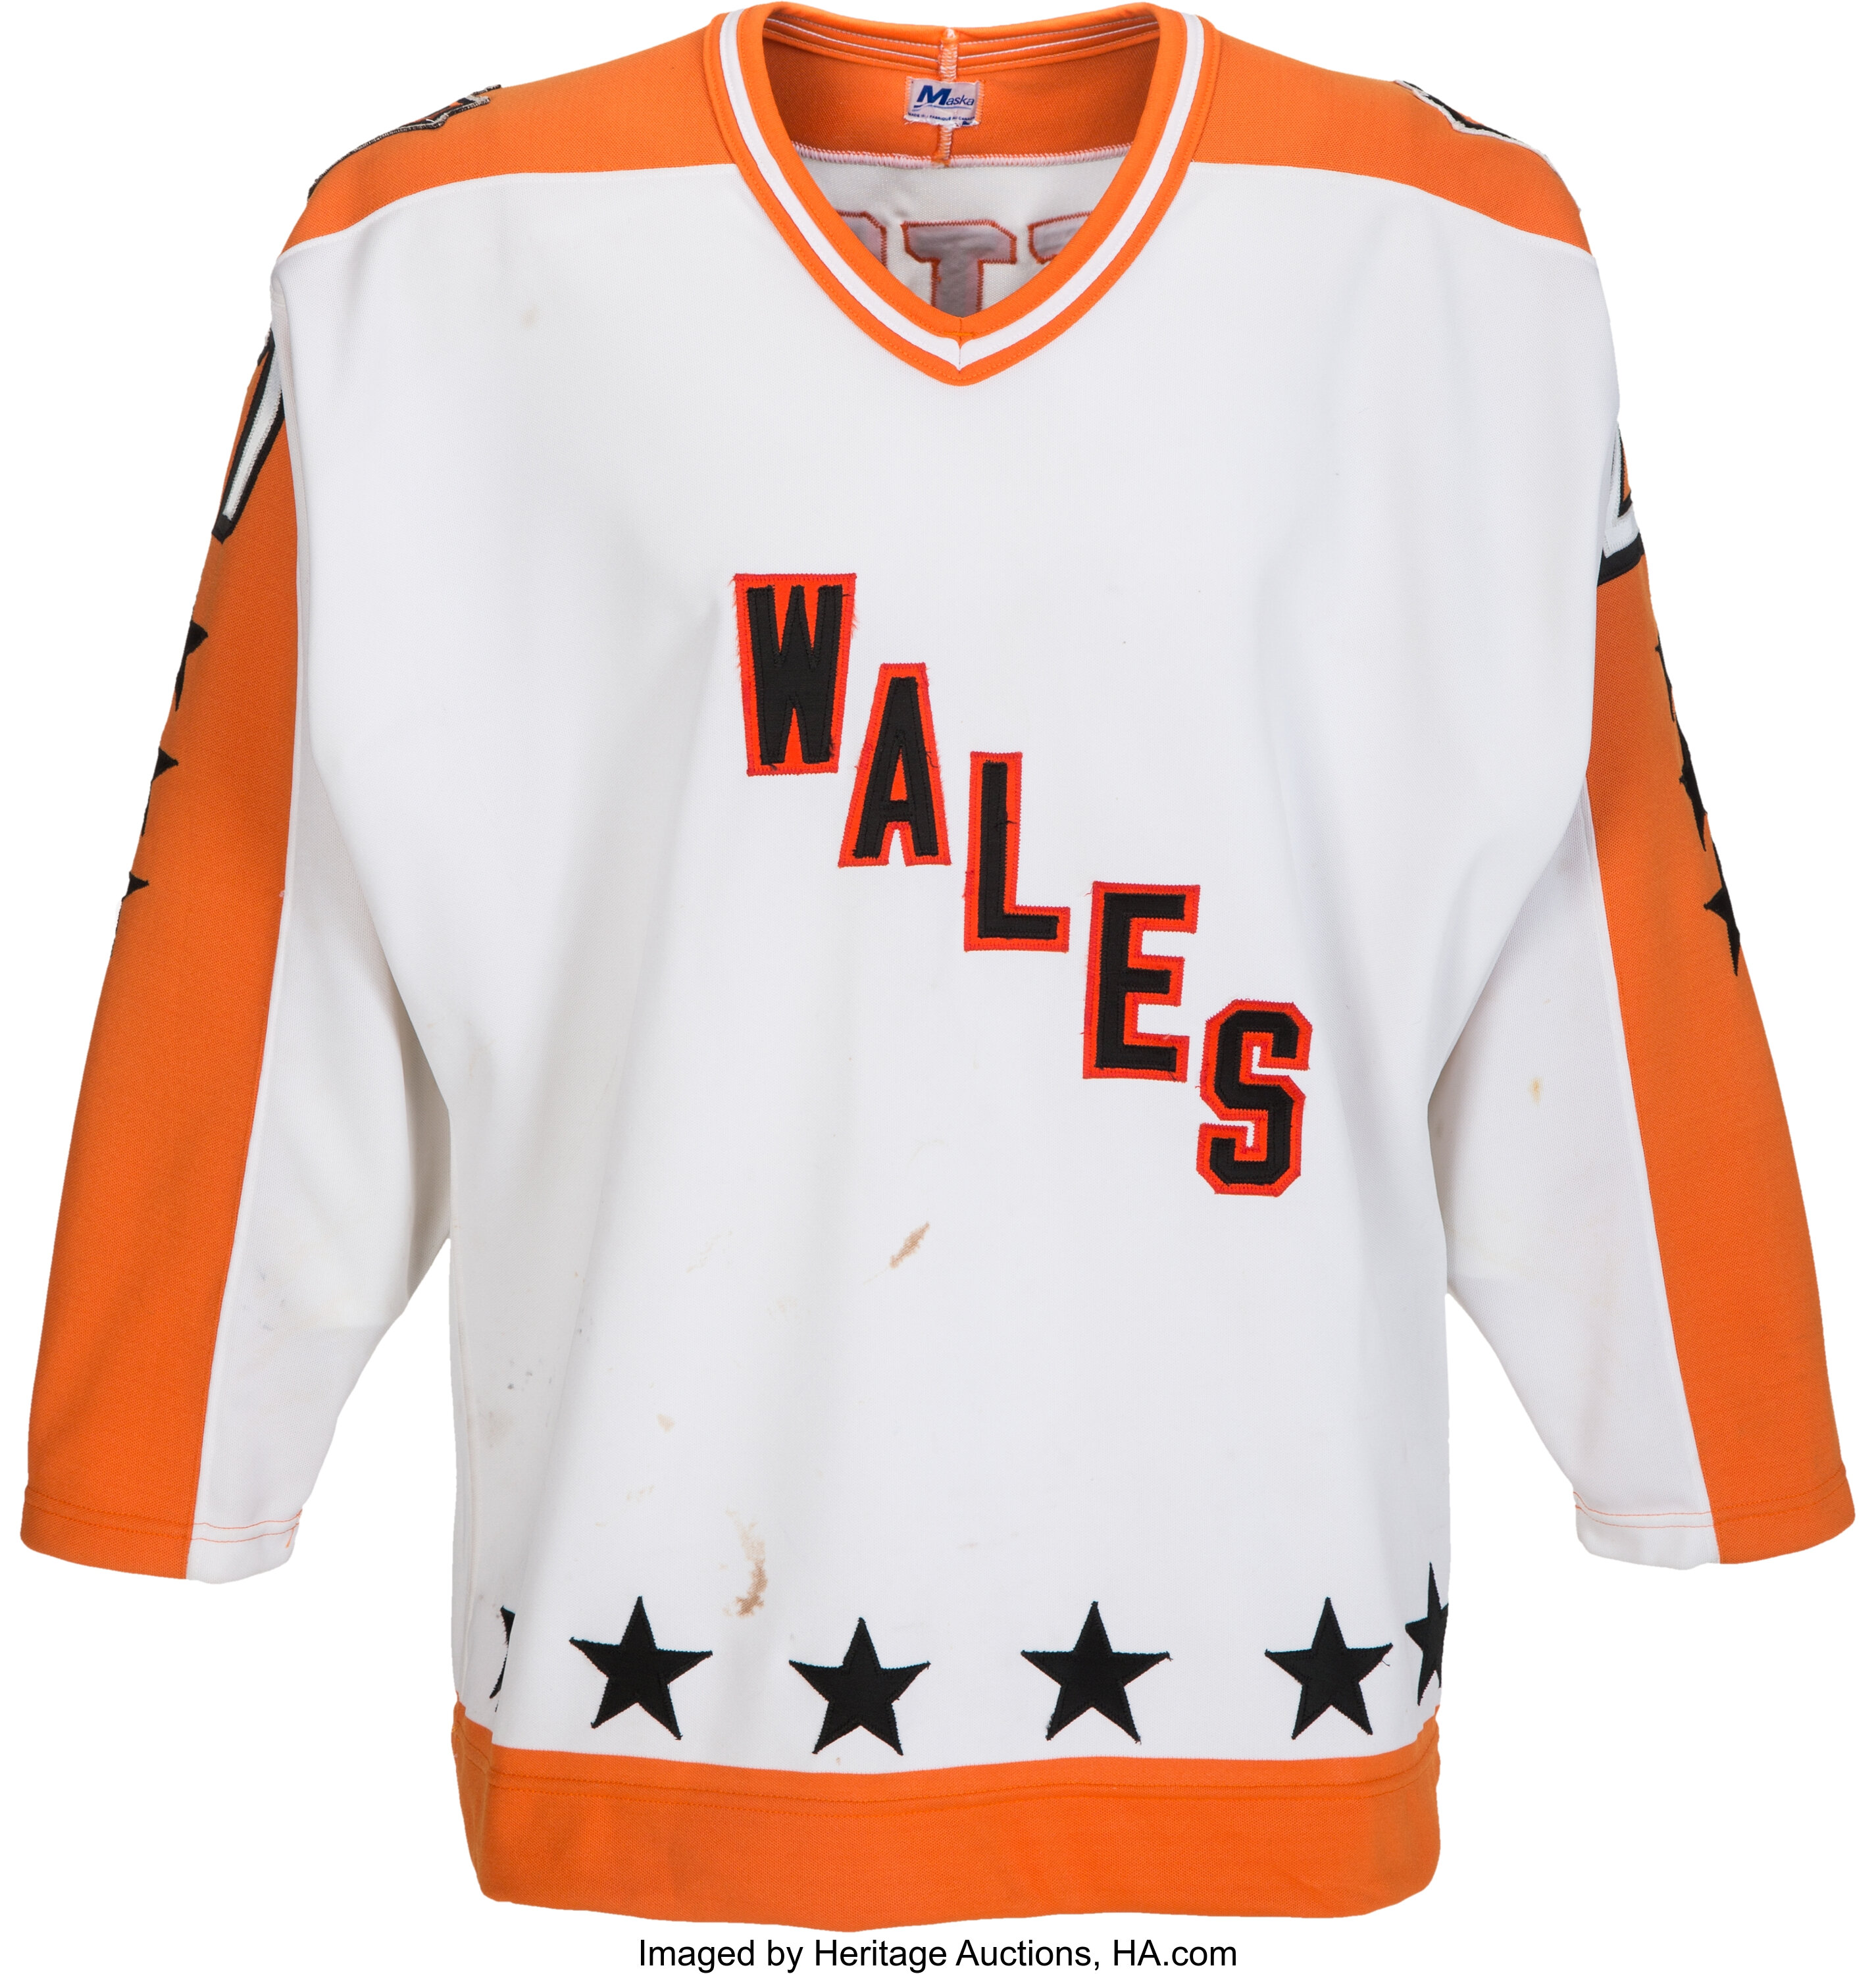 NHL all team logo shirt - Dalatshirt